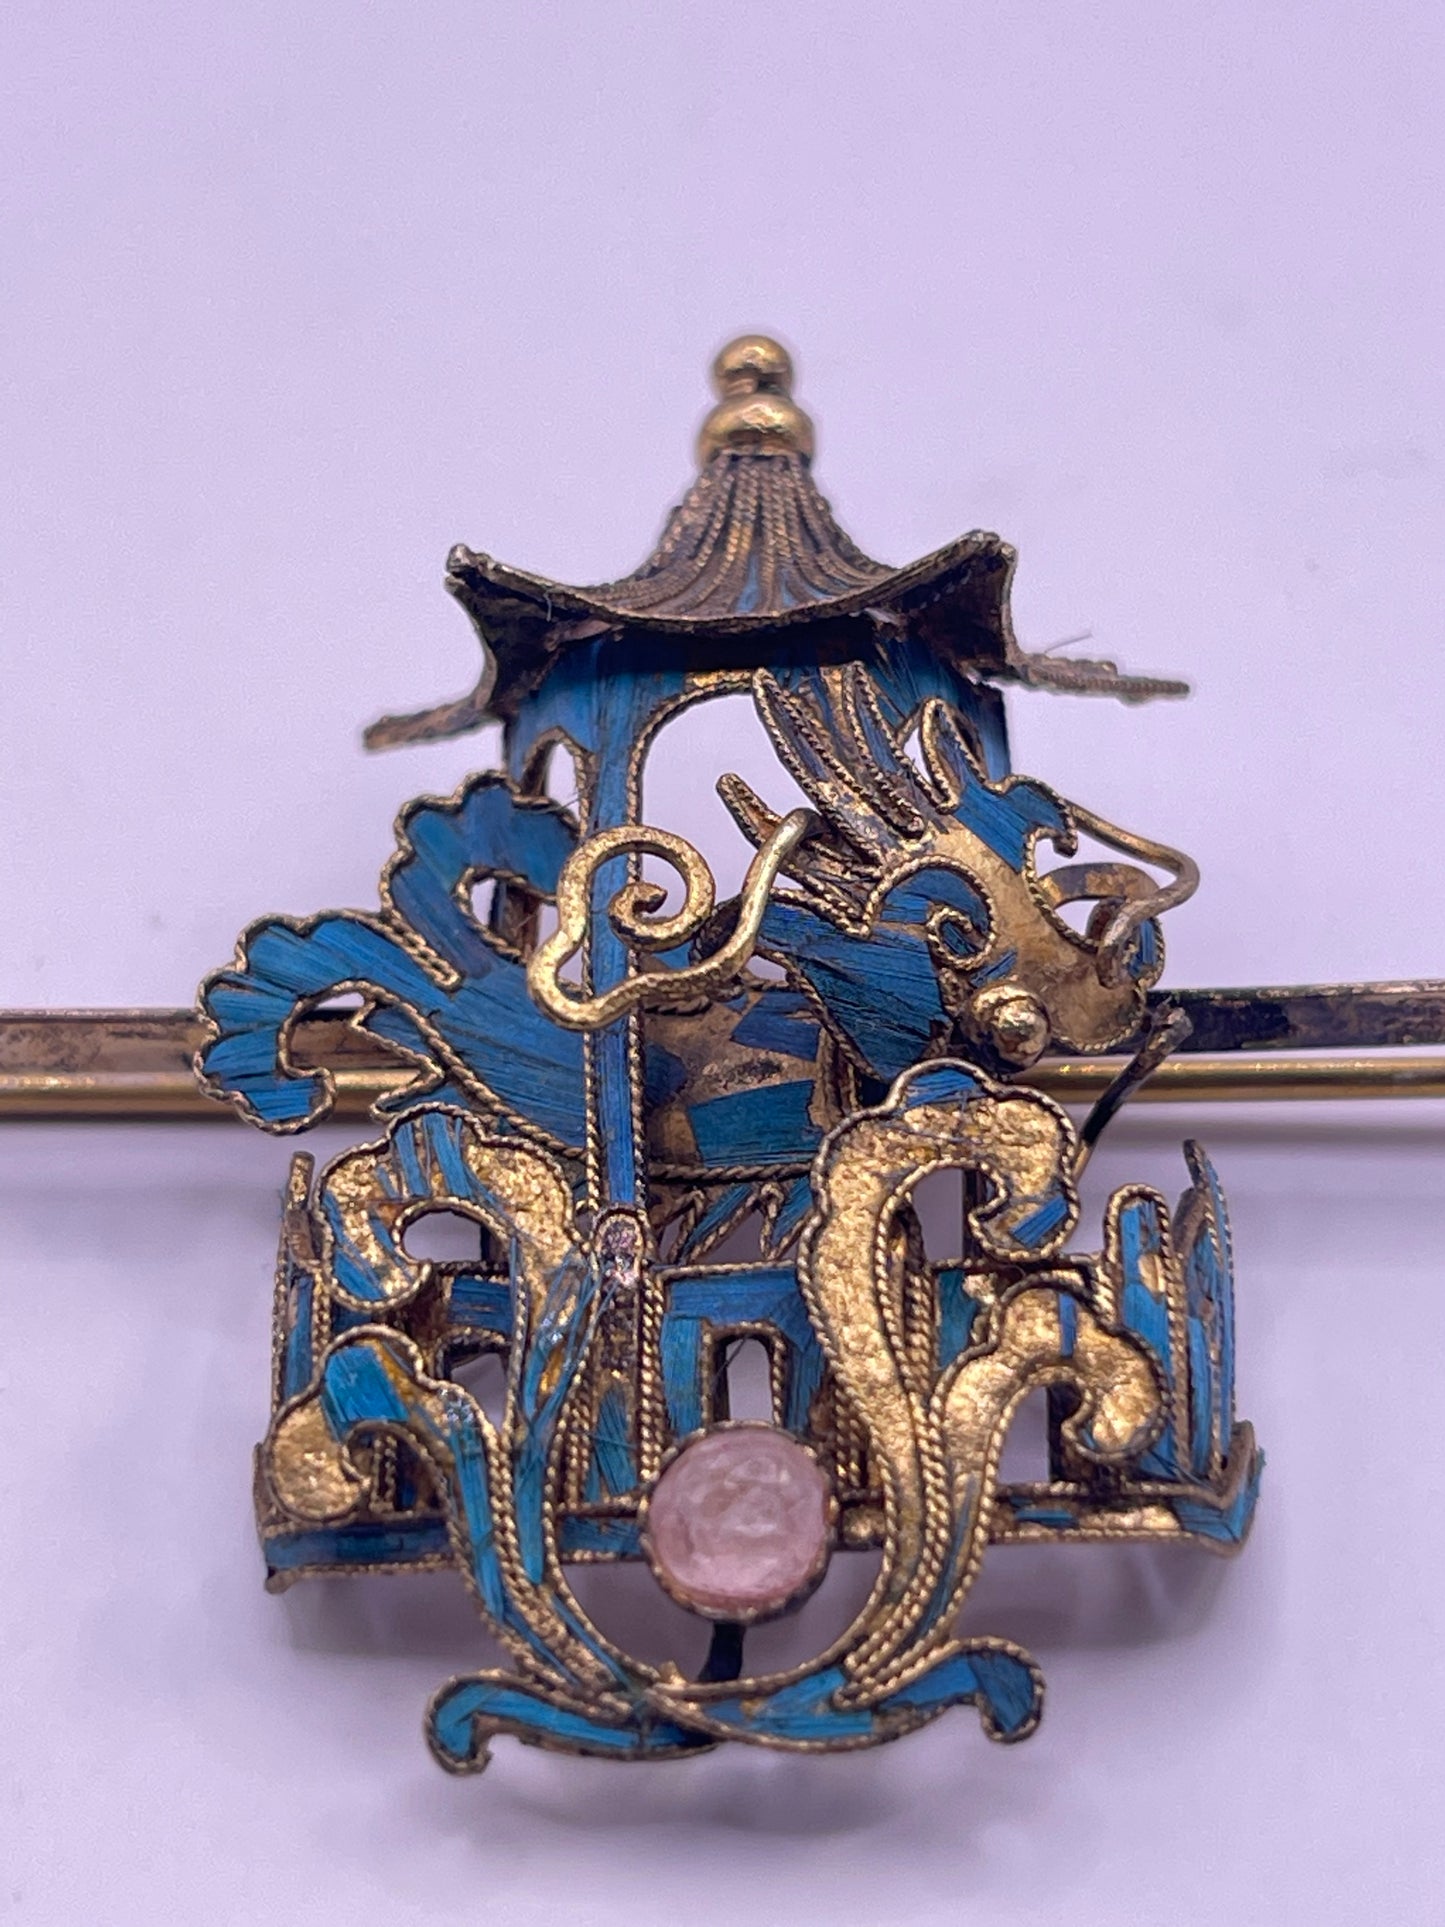 A dragon and pagoda kingfisher pin